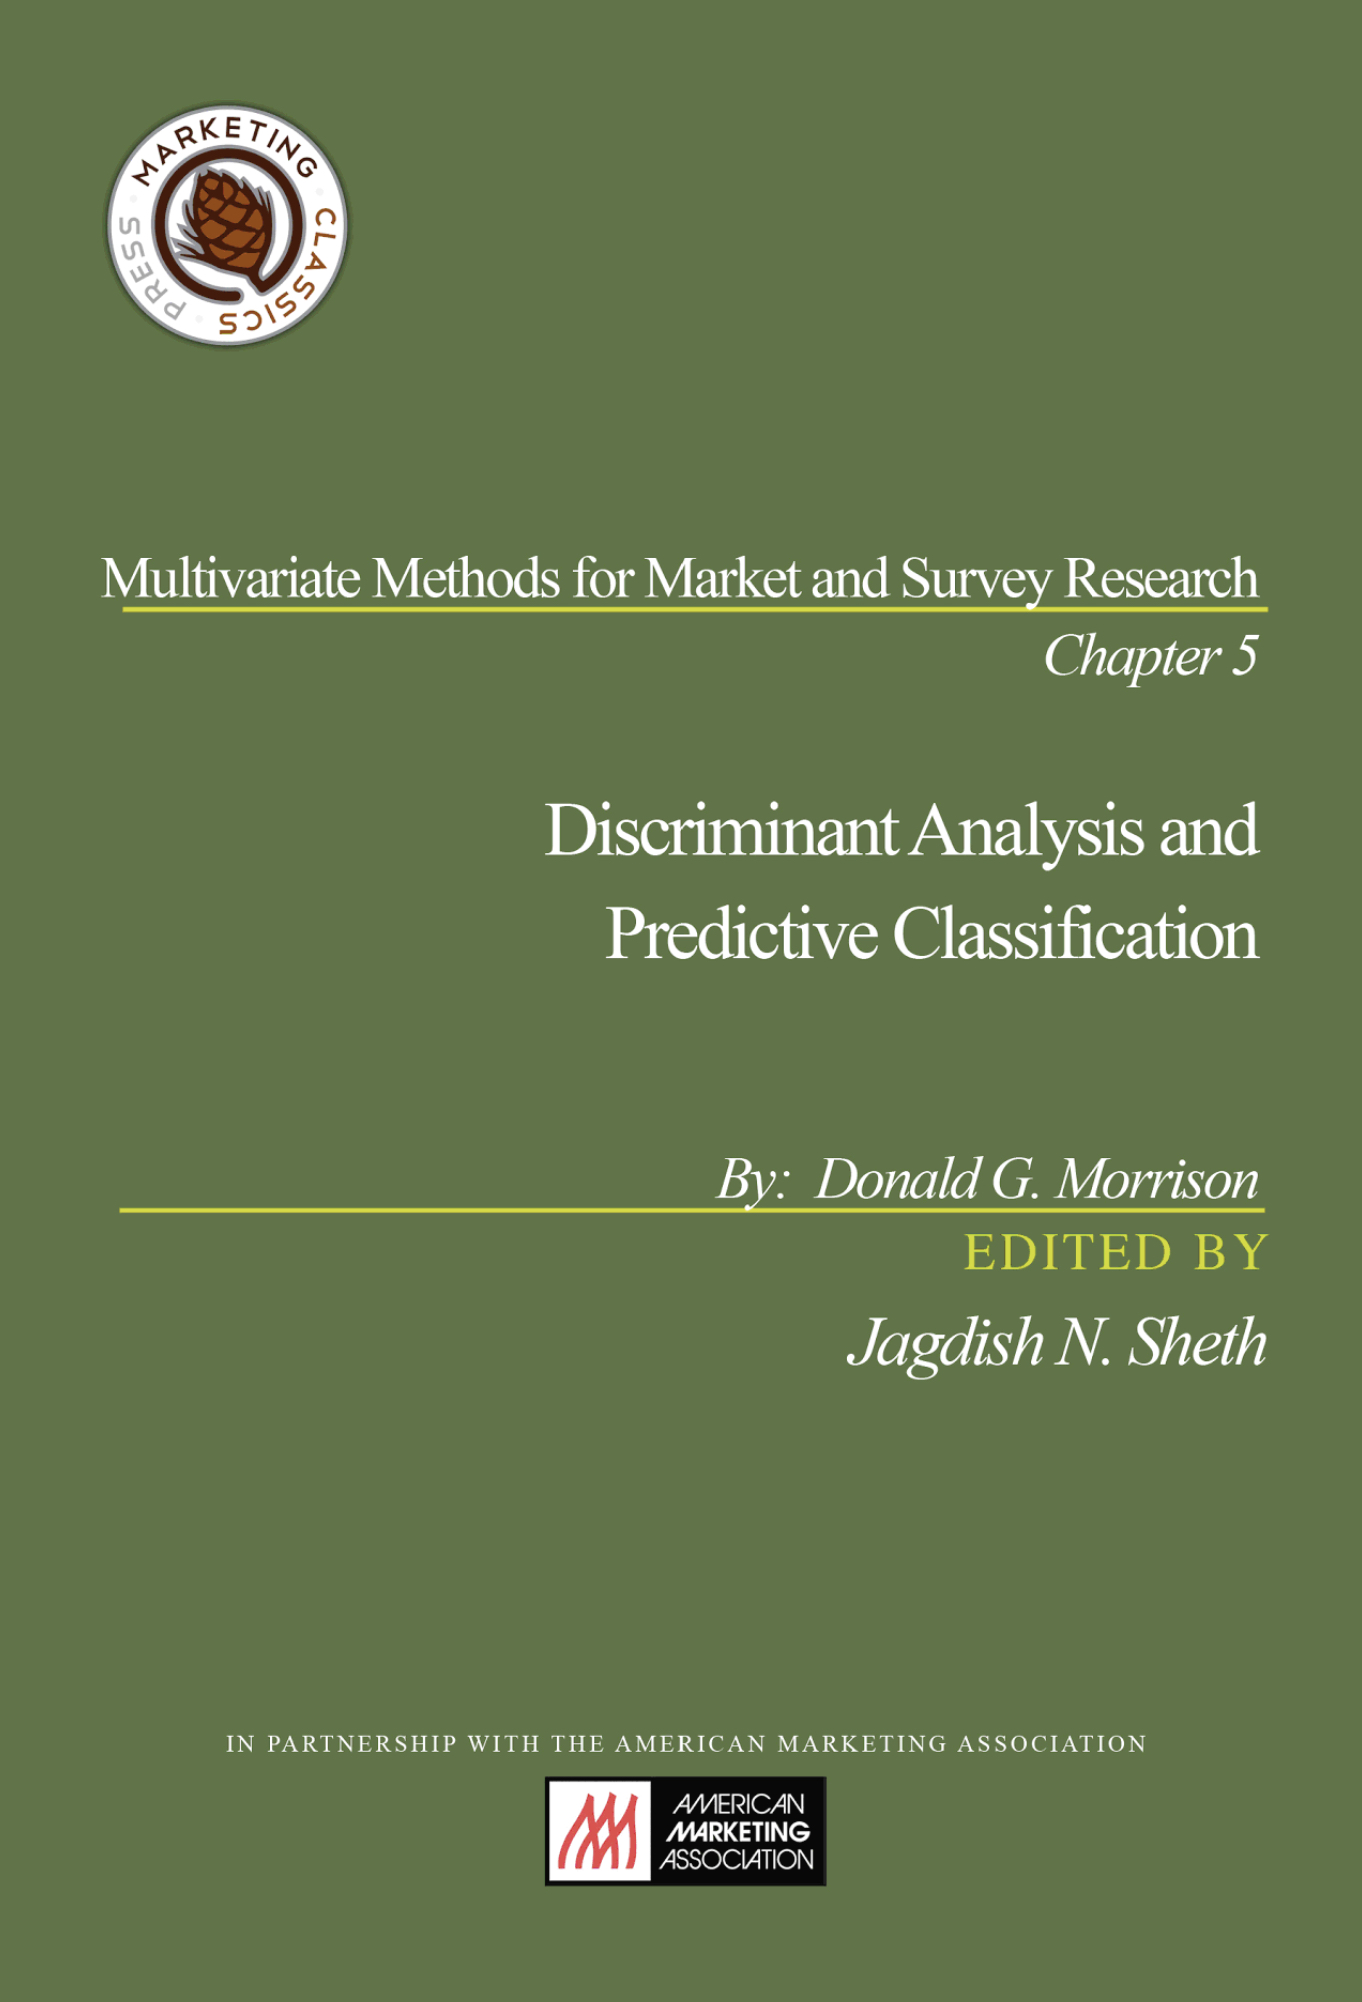 Discriminant Analysis and Predictive Classification